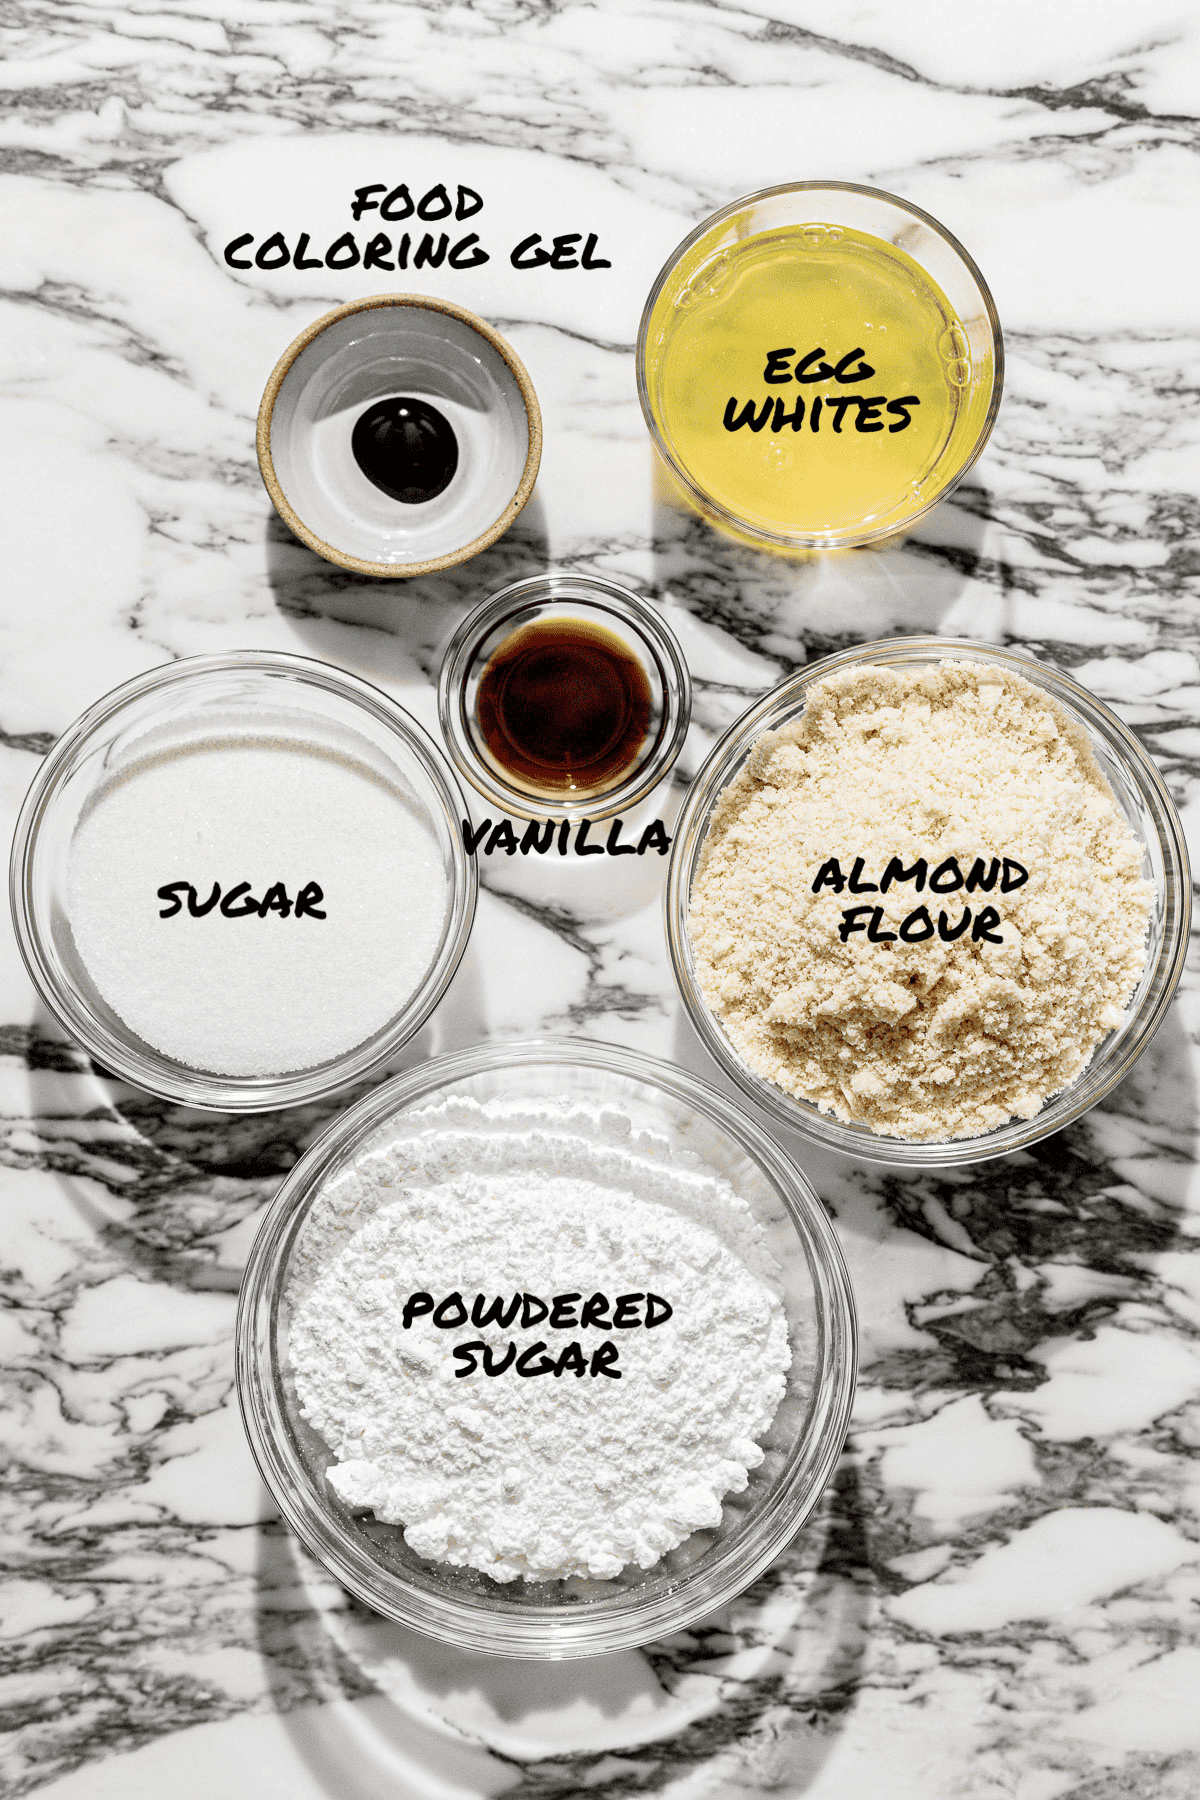 ingredients for macaron shells.